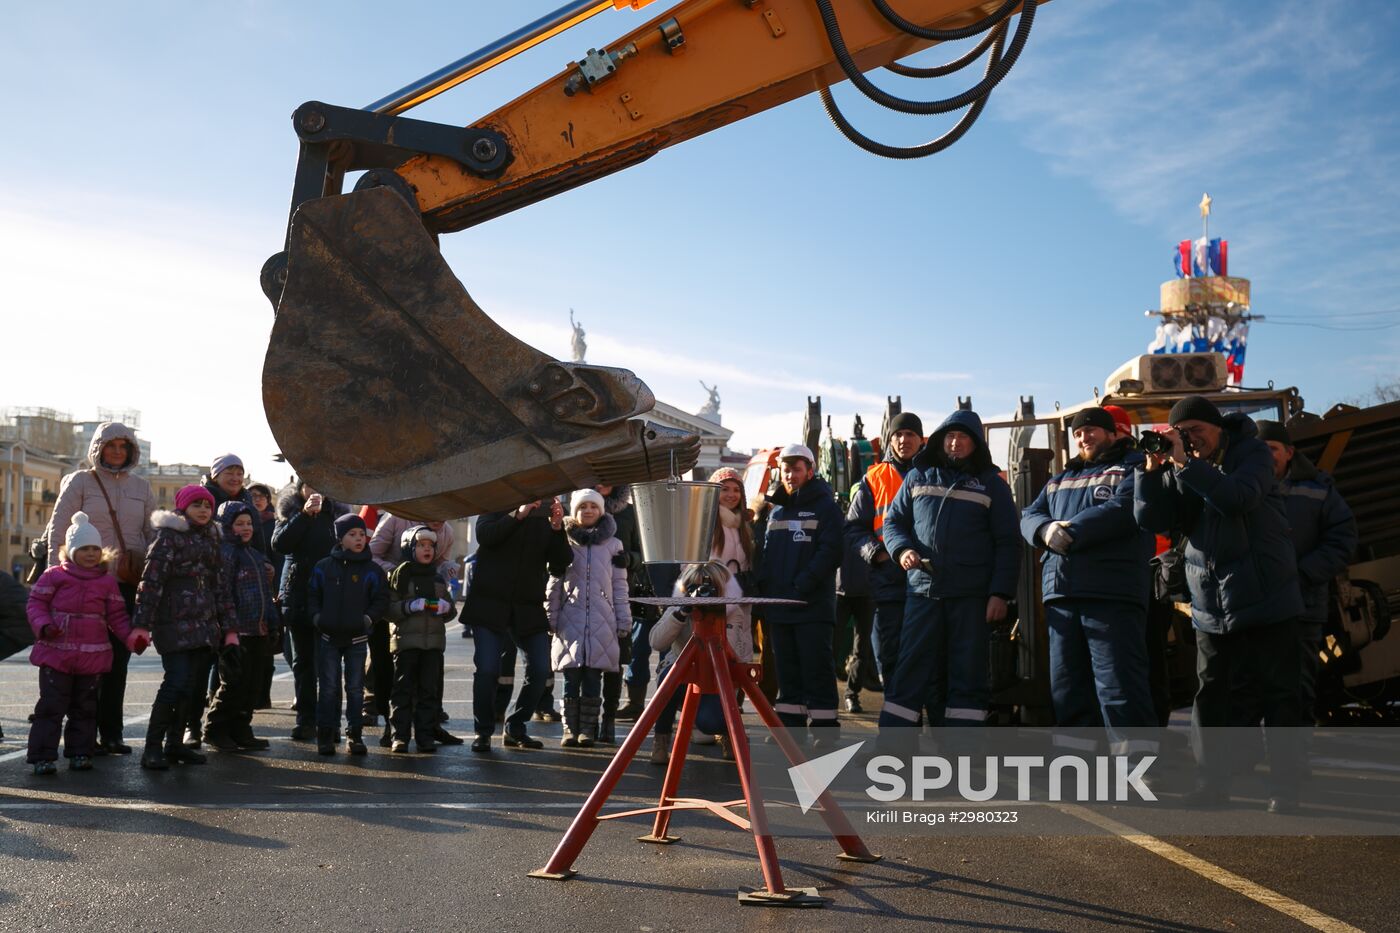 Municipal machinery parade in Russian cities